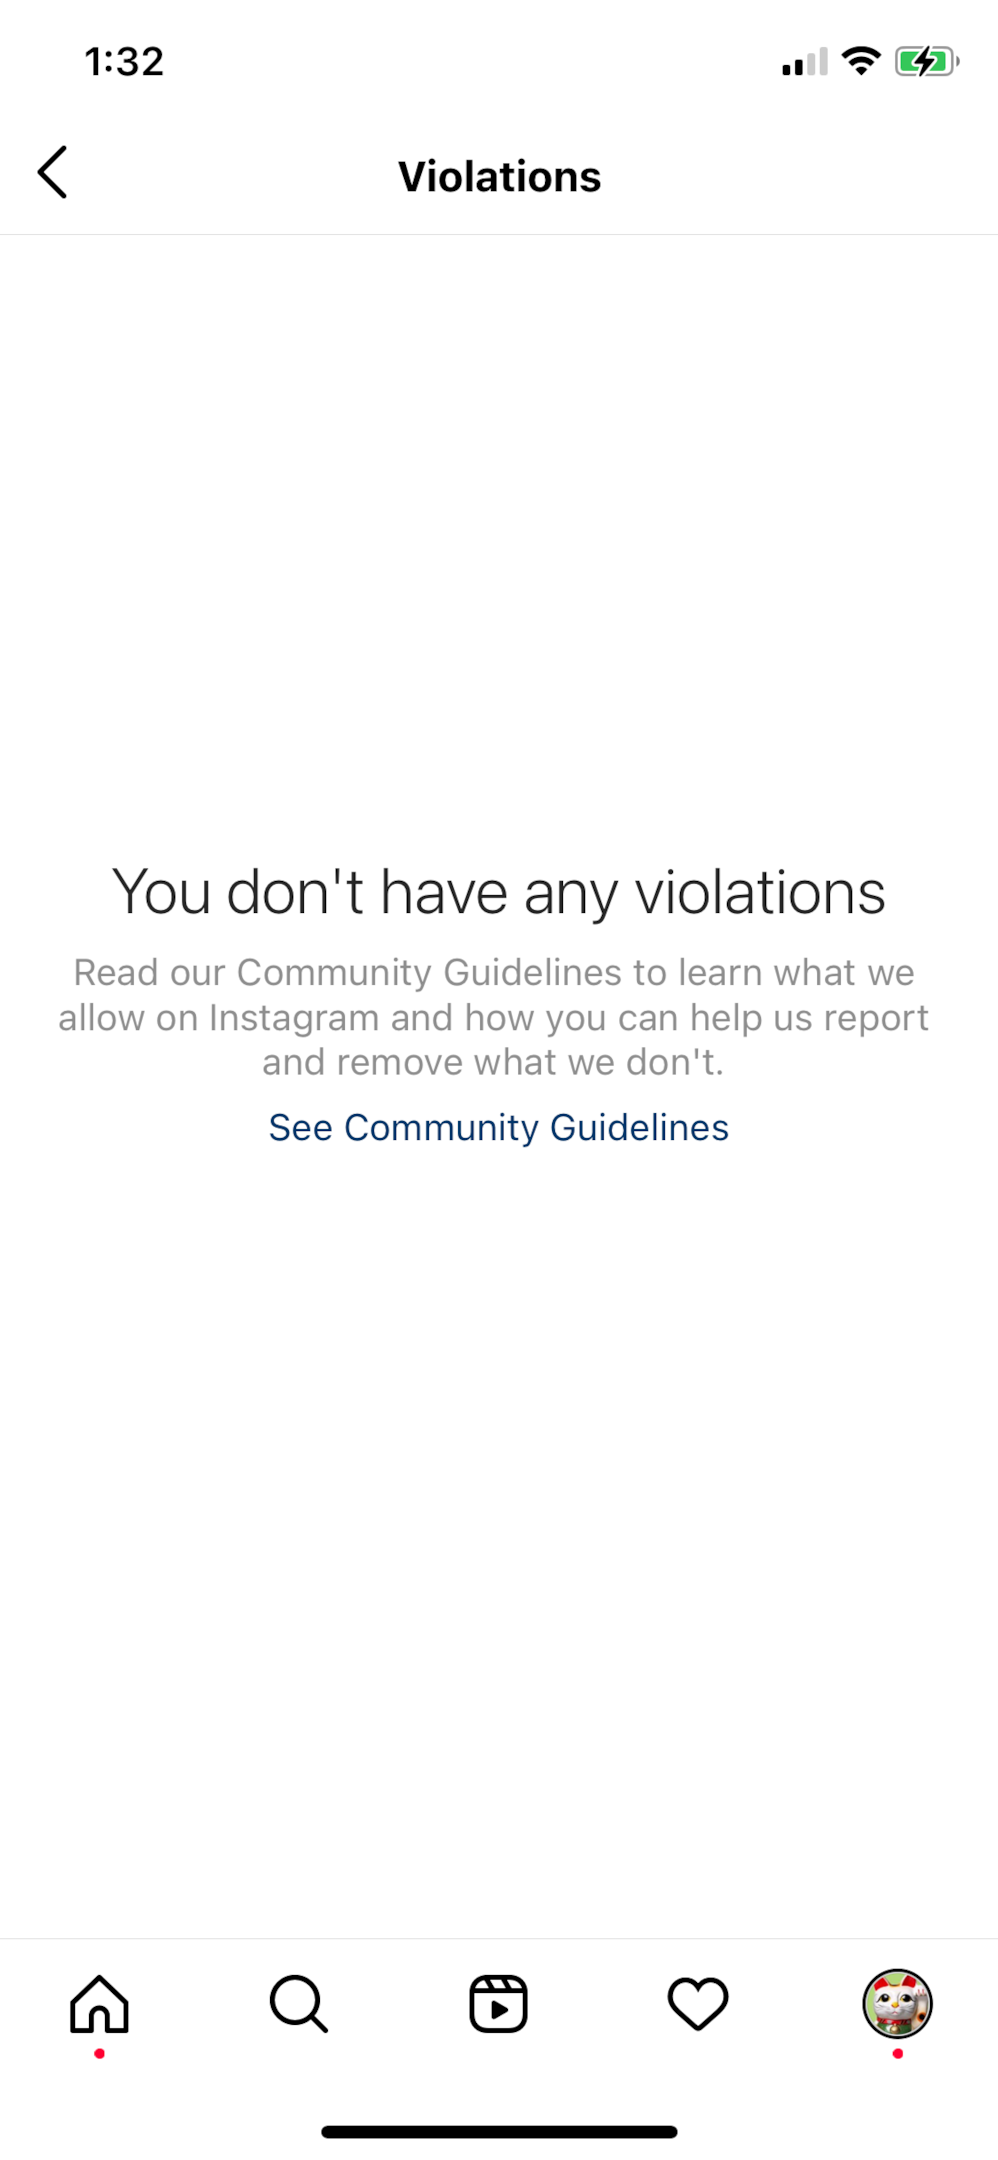 Screenshot of Instagram violations